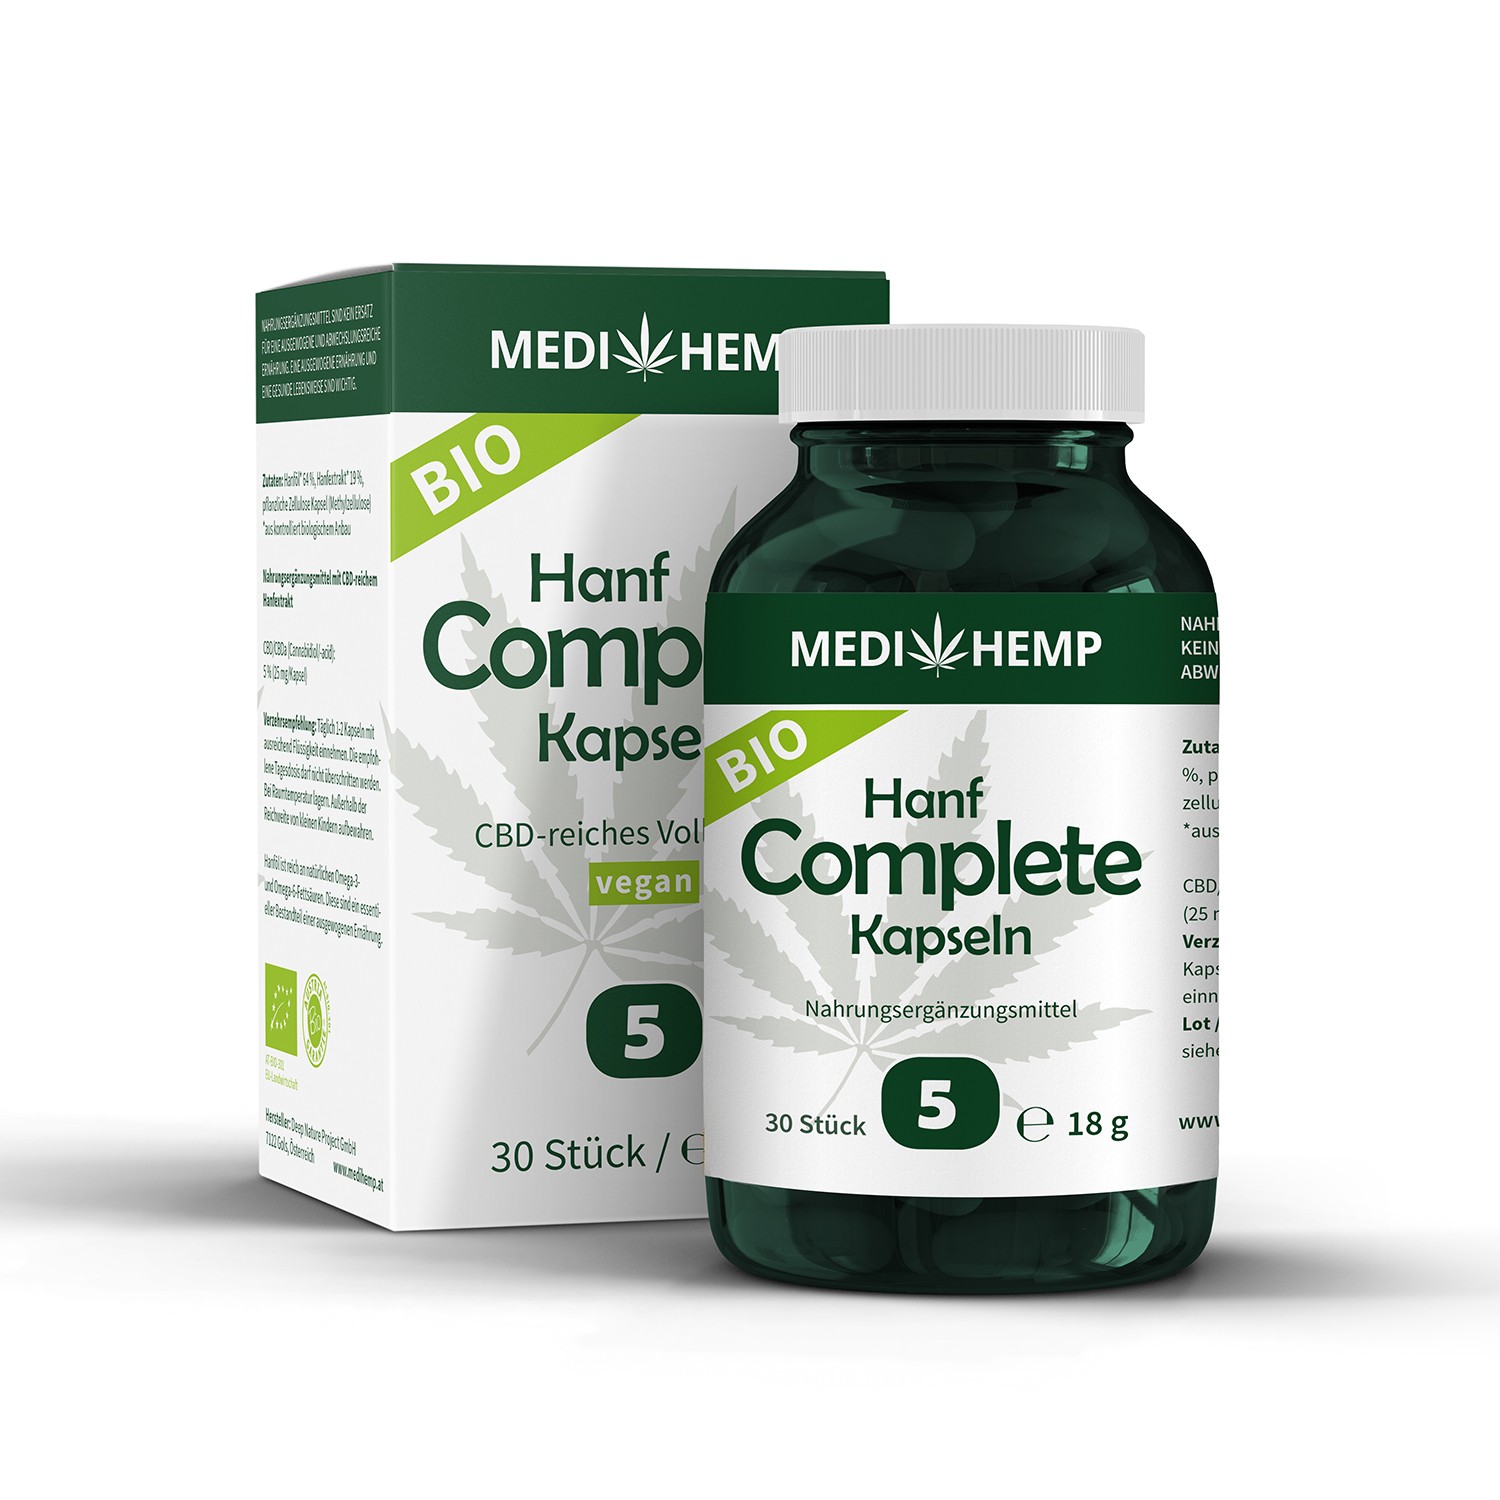 Medihemp Bio Hanf Complete Kapseln - 5 % - CBD Aroma